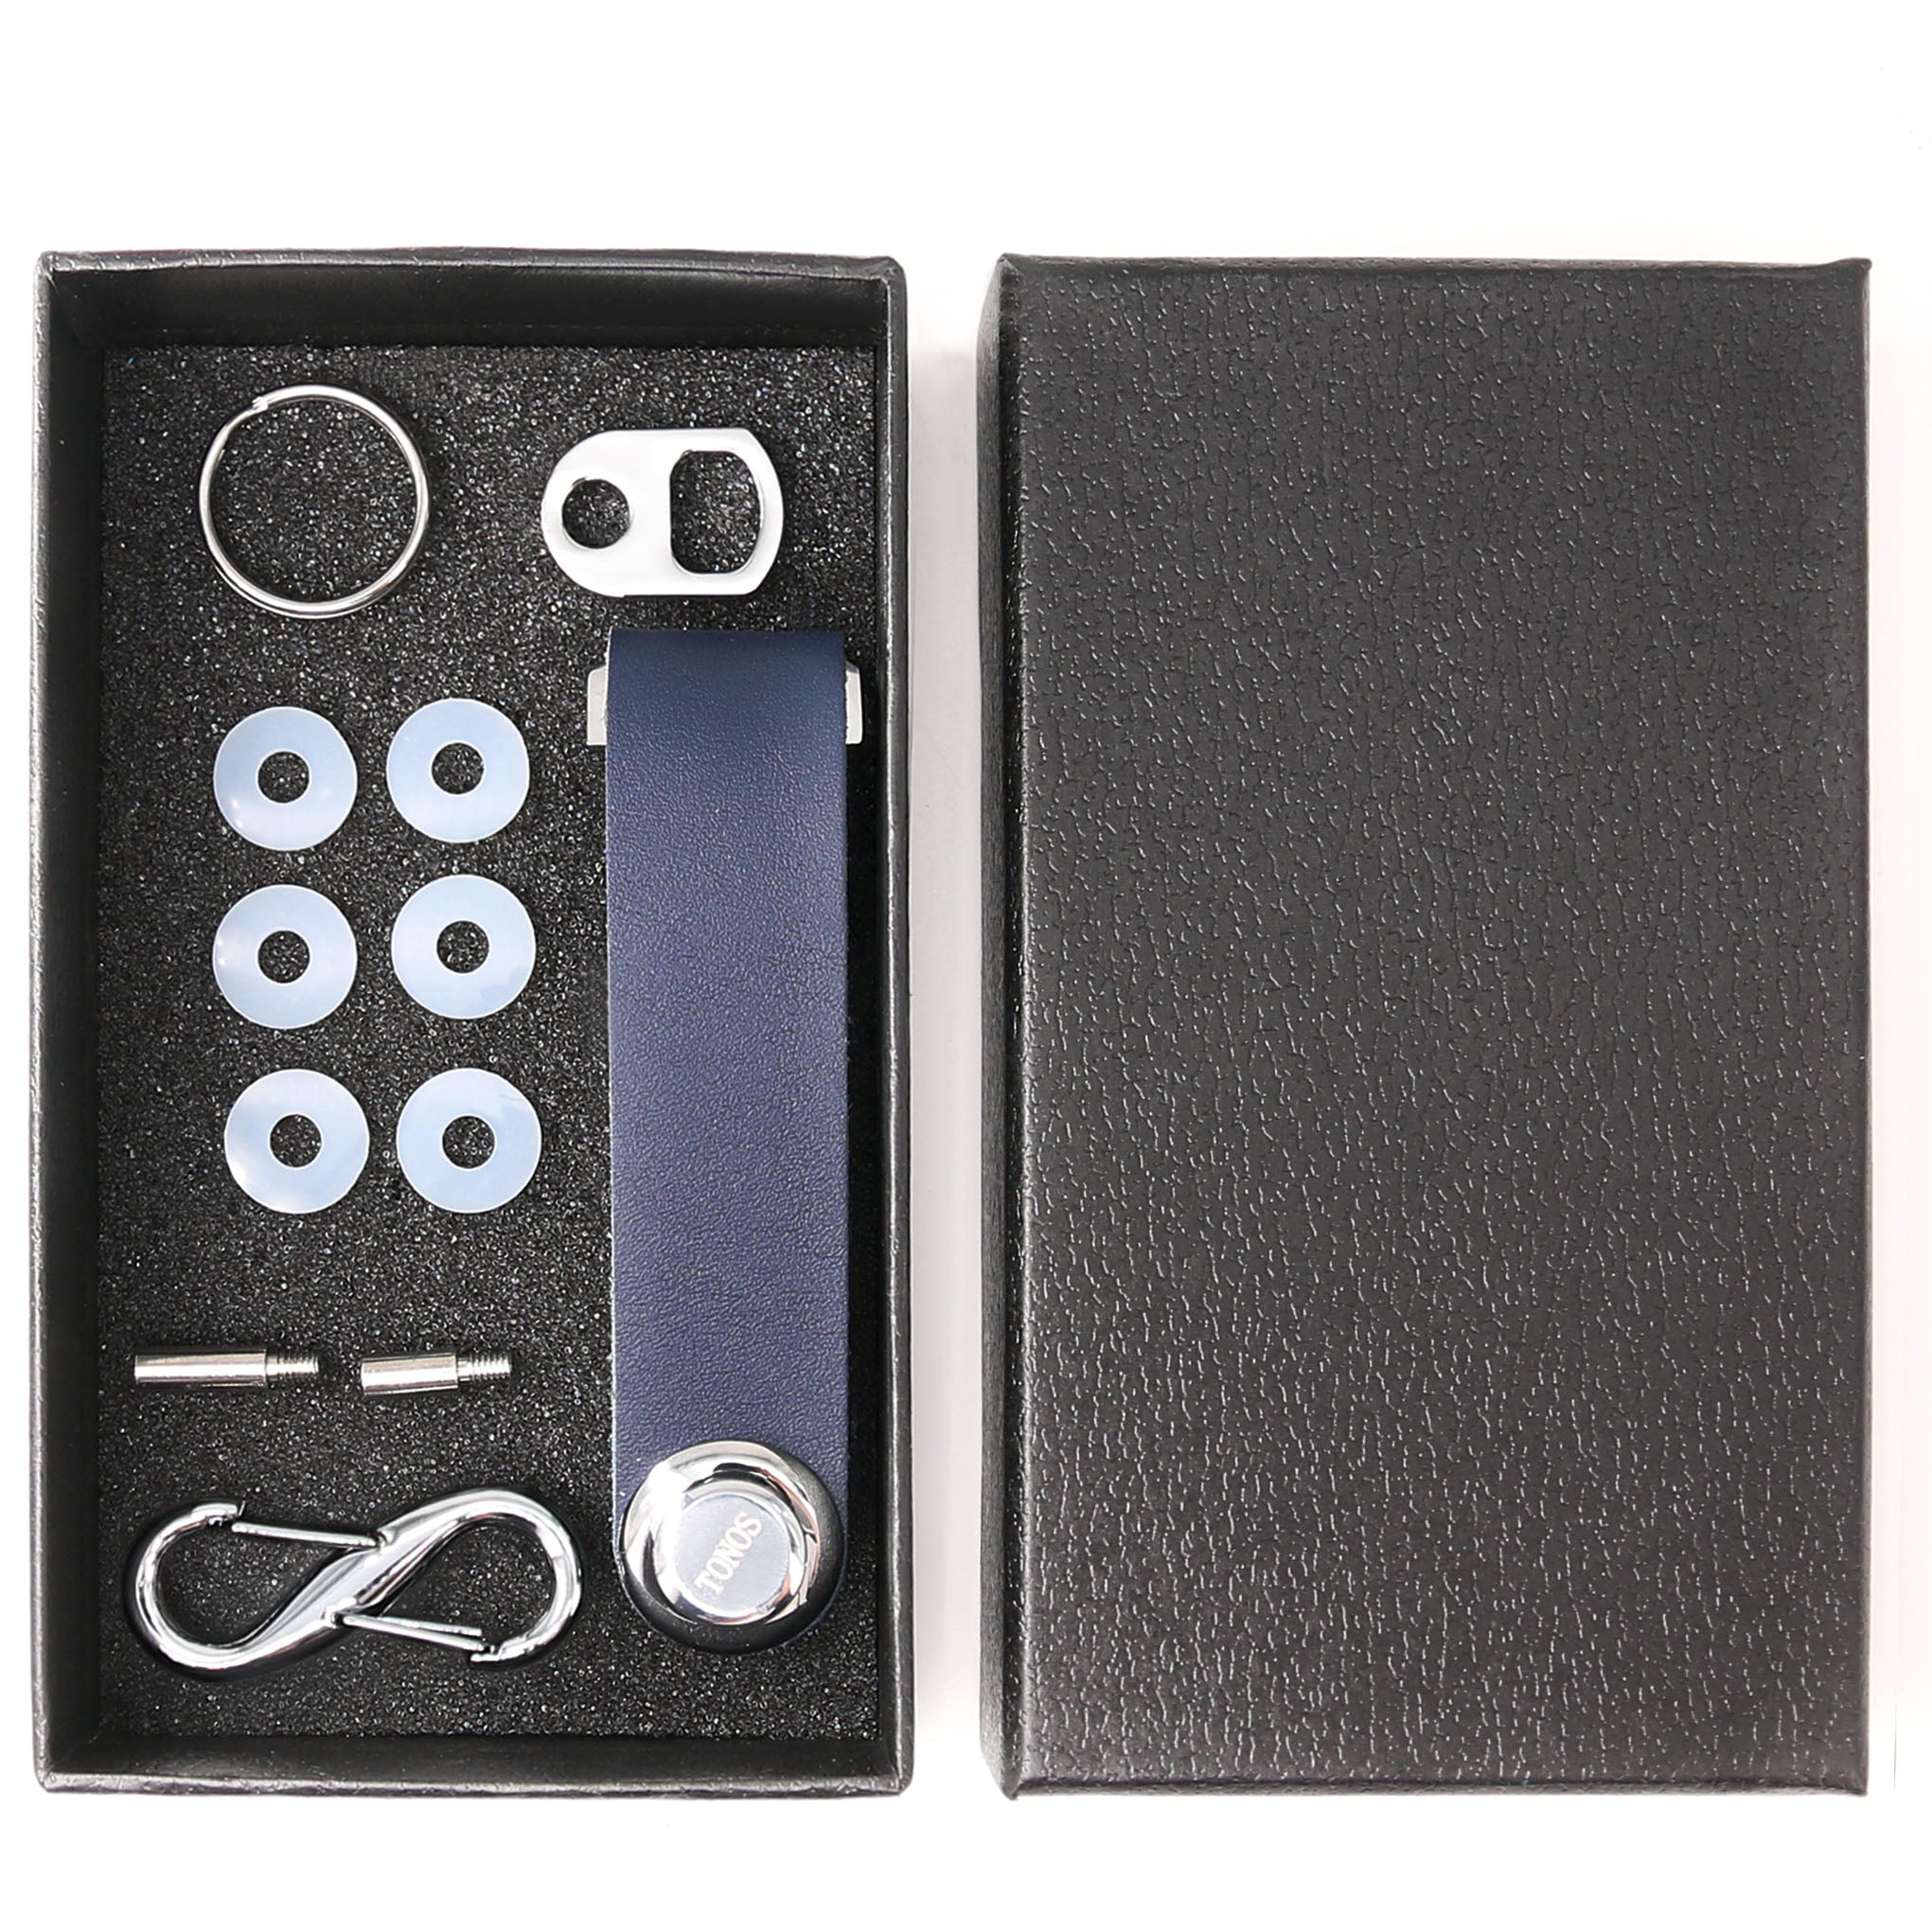 Pocket Organizer Safe HILZO Compact Key Organizer Key Chain Holder and Key Bar up to 8 Keys Compact 